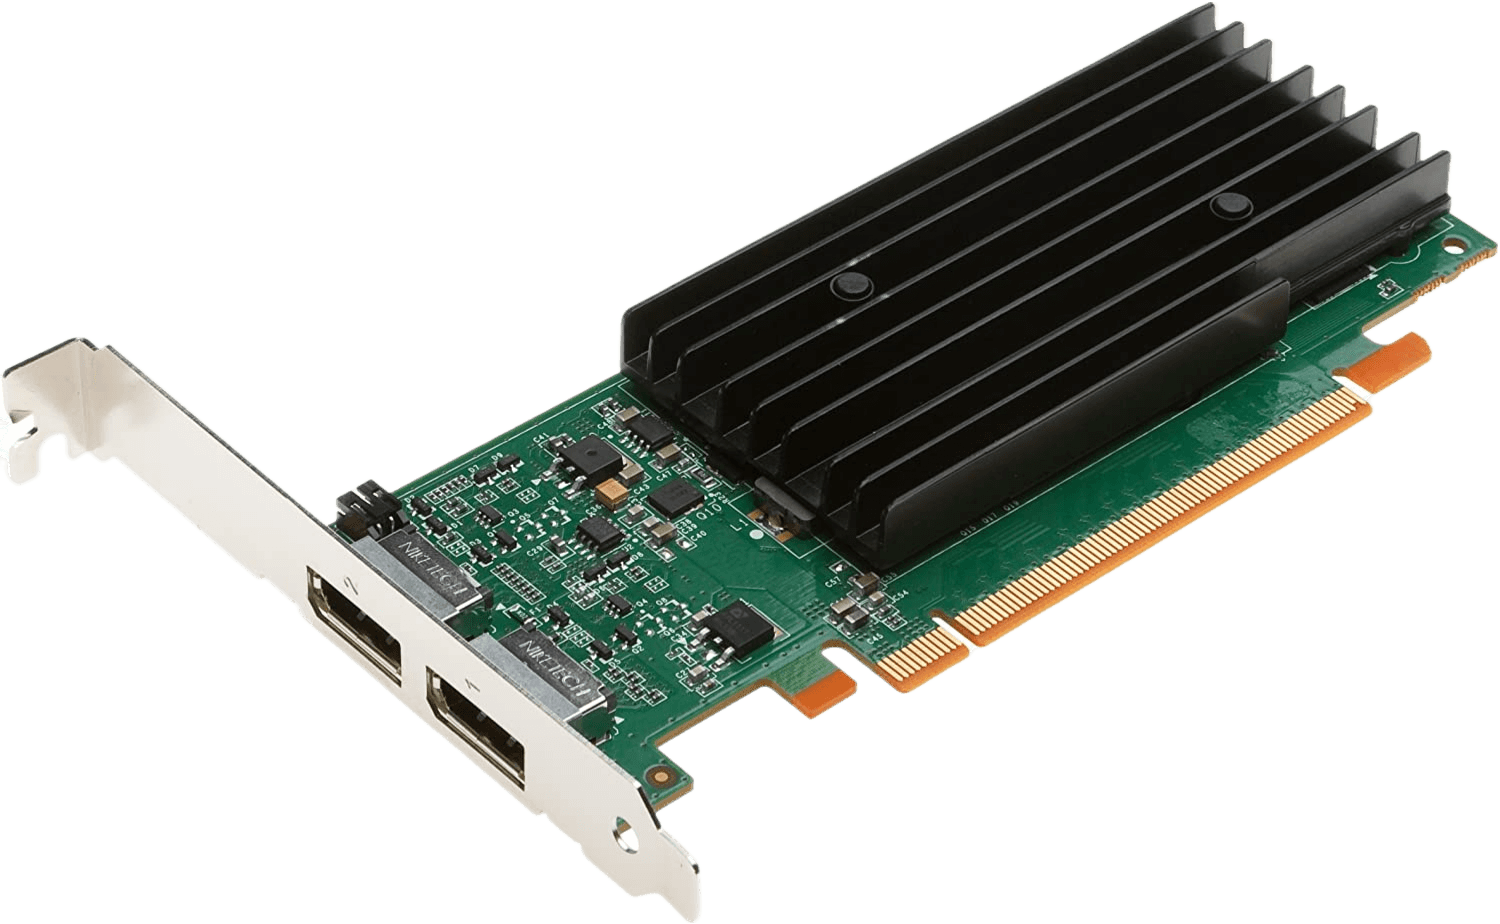 PNY NVIDIA Quadro NVS 295 by PNY 256MB GDDR3 PCI Express Gen 2 x16 Dual DisplayPort or DVI-D SL Workstation Card VCQ295NVS-X16-DVI-PB